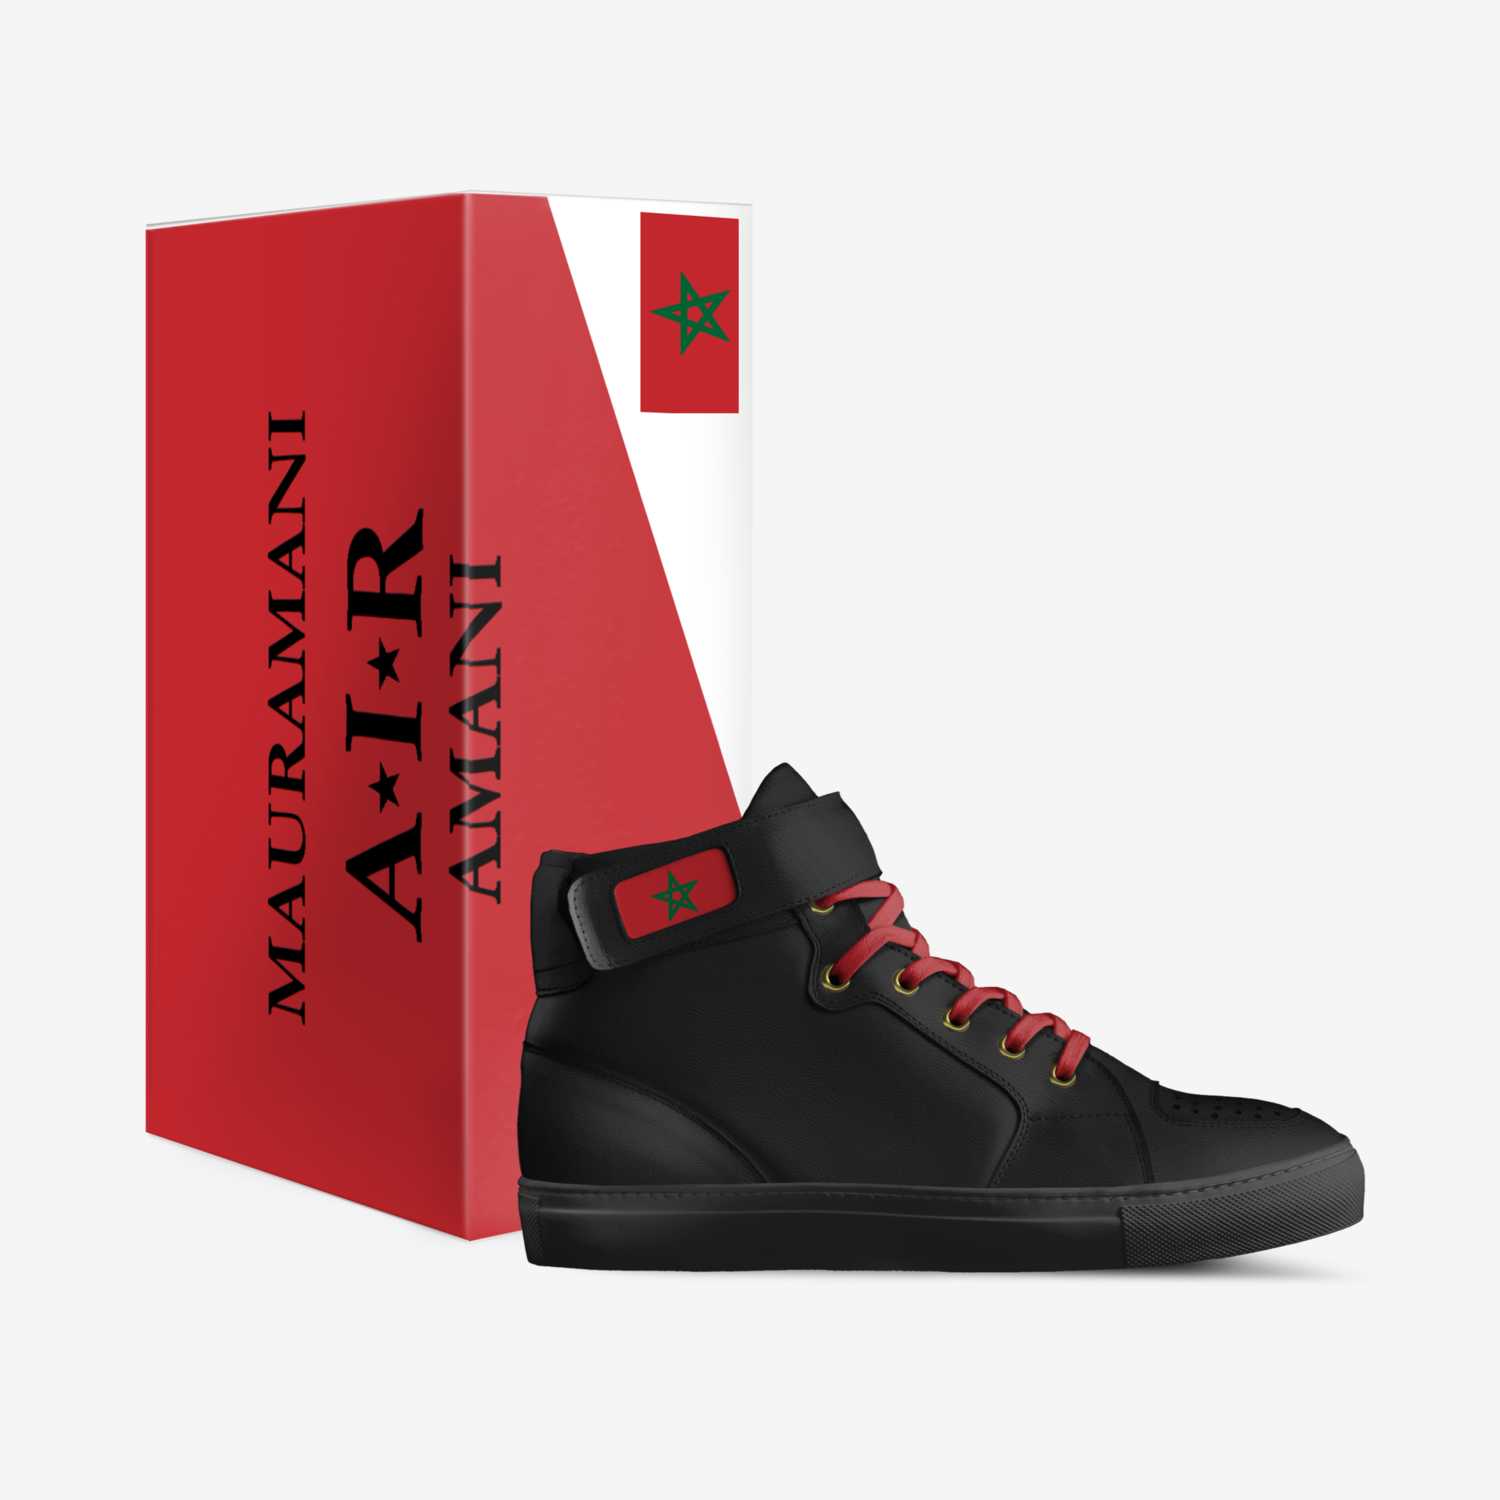 MAURAMANI custom made in Italy shoes by Amaanah Taqwaamani | Box view